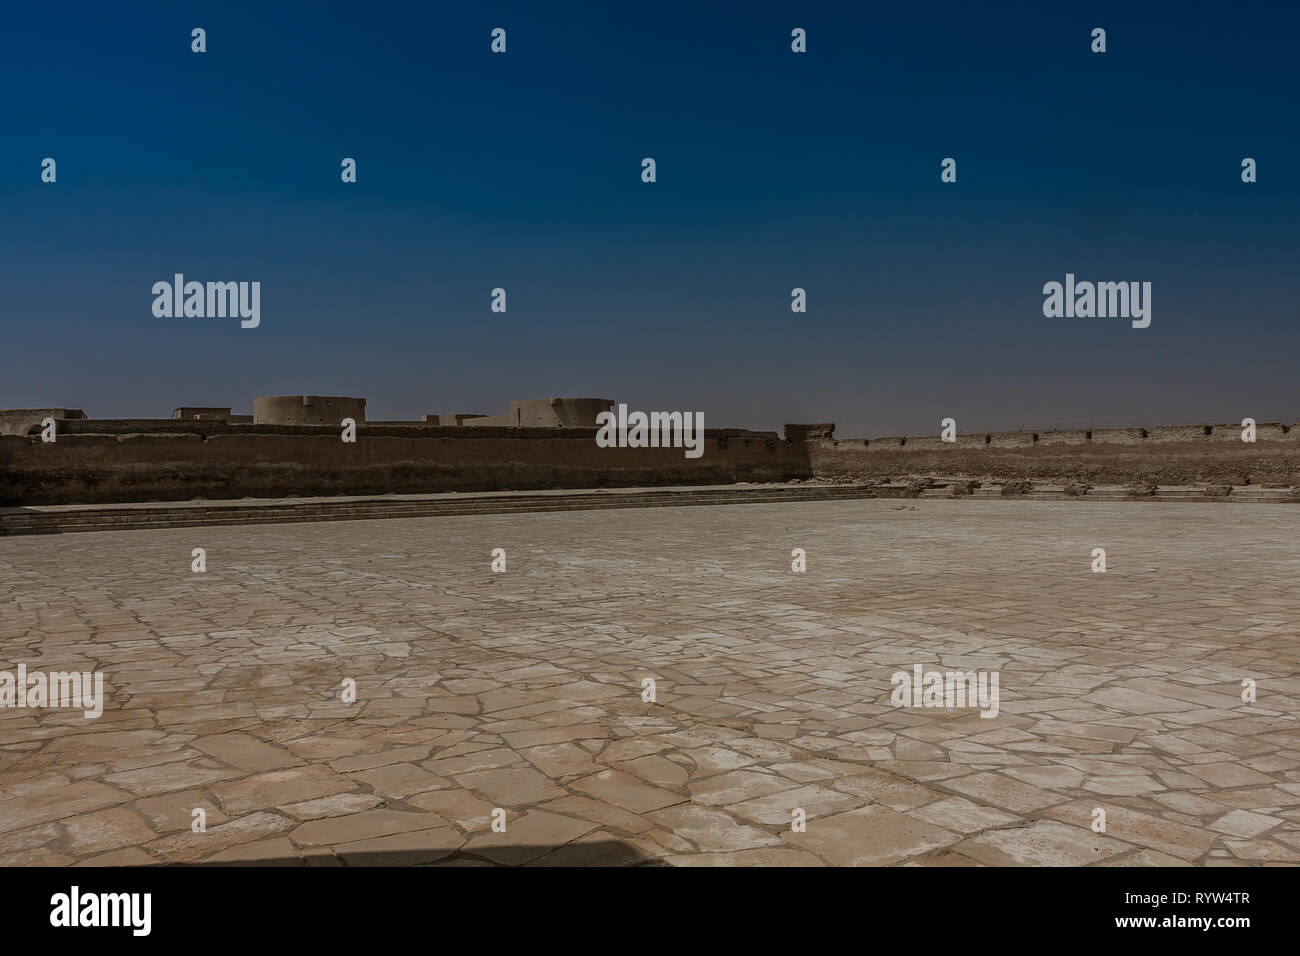 A courtyard of Aqeer Castle, Saudi Arabia Stock Photo